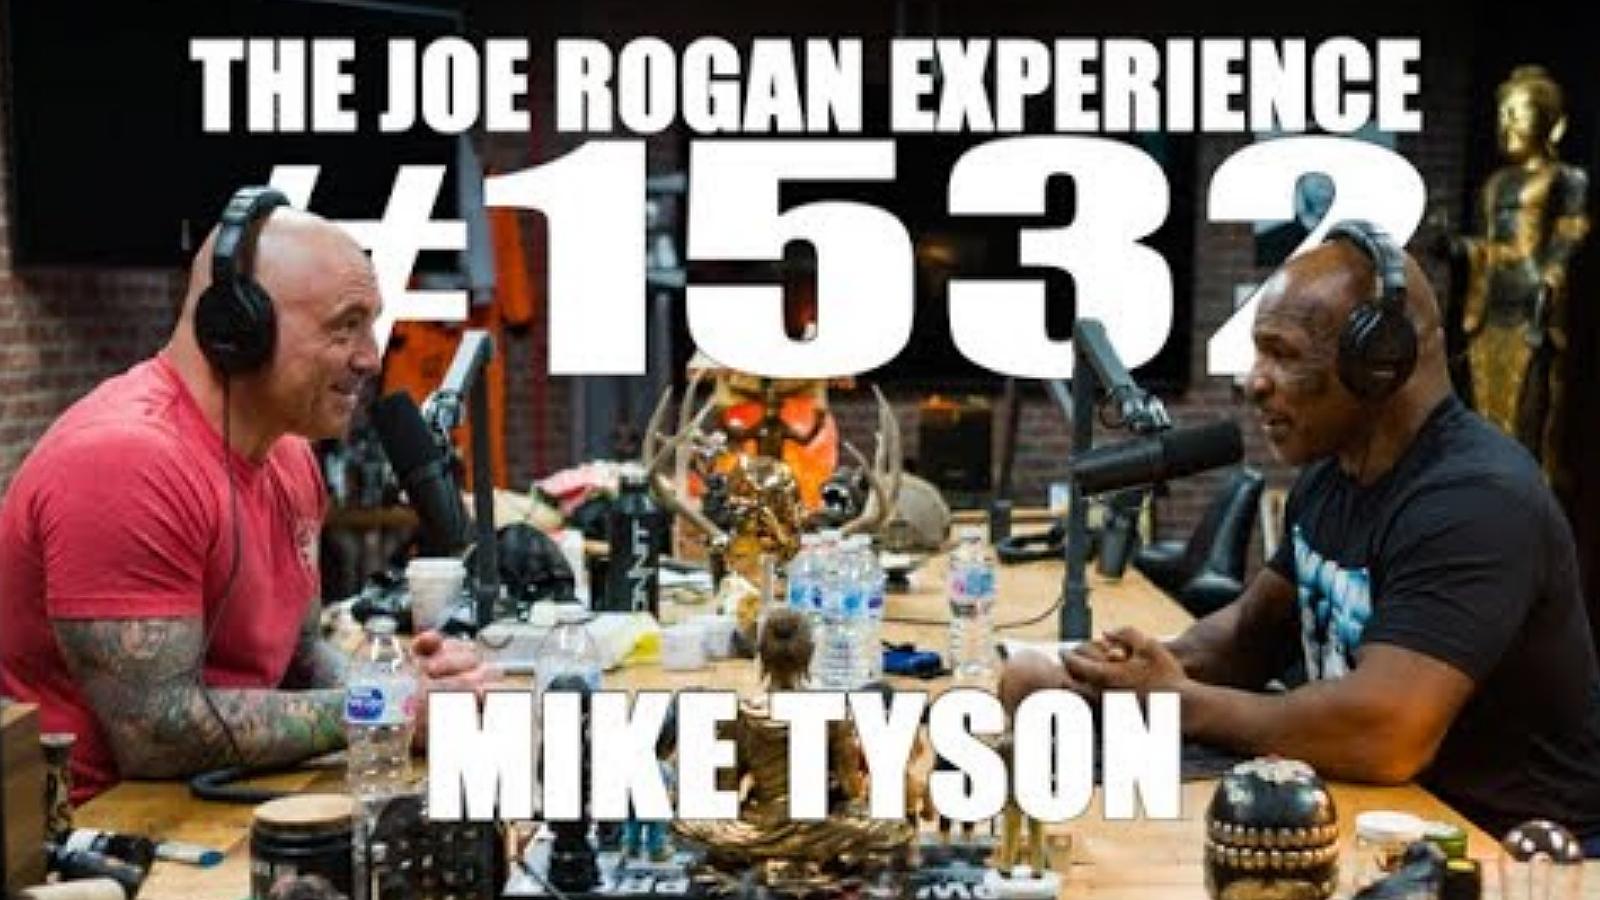 Mike Tyson on Joe Rogan podcast